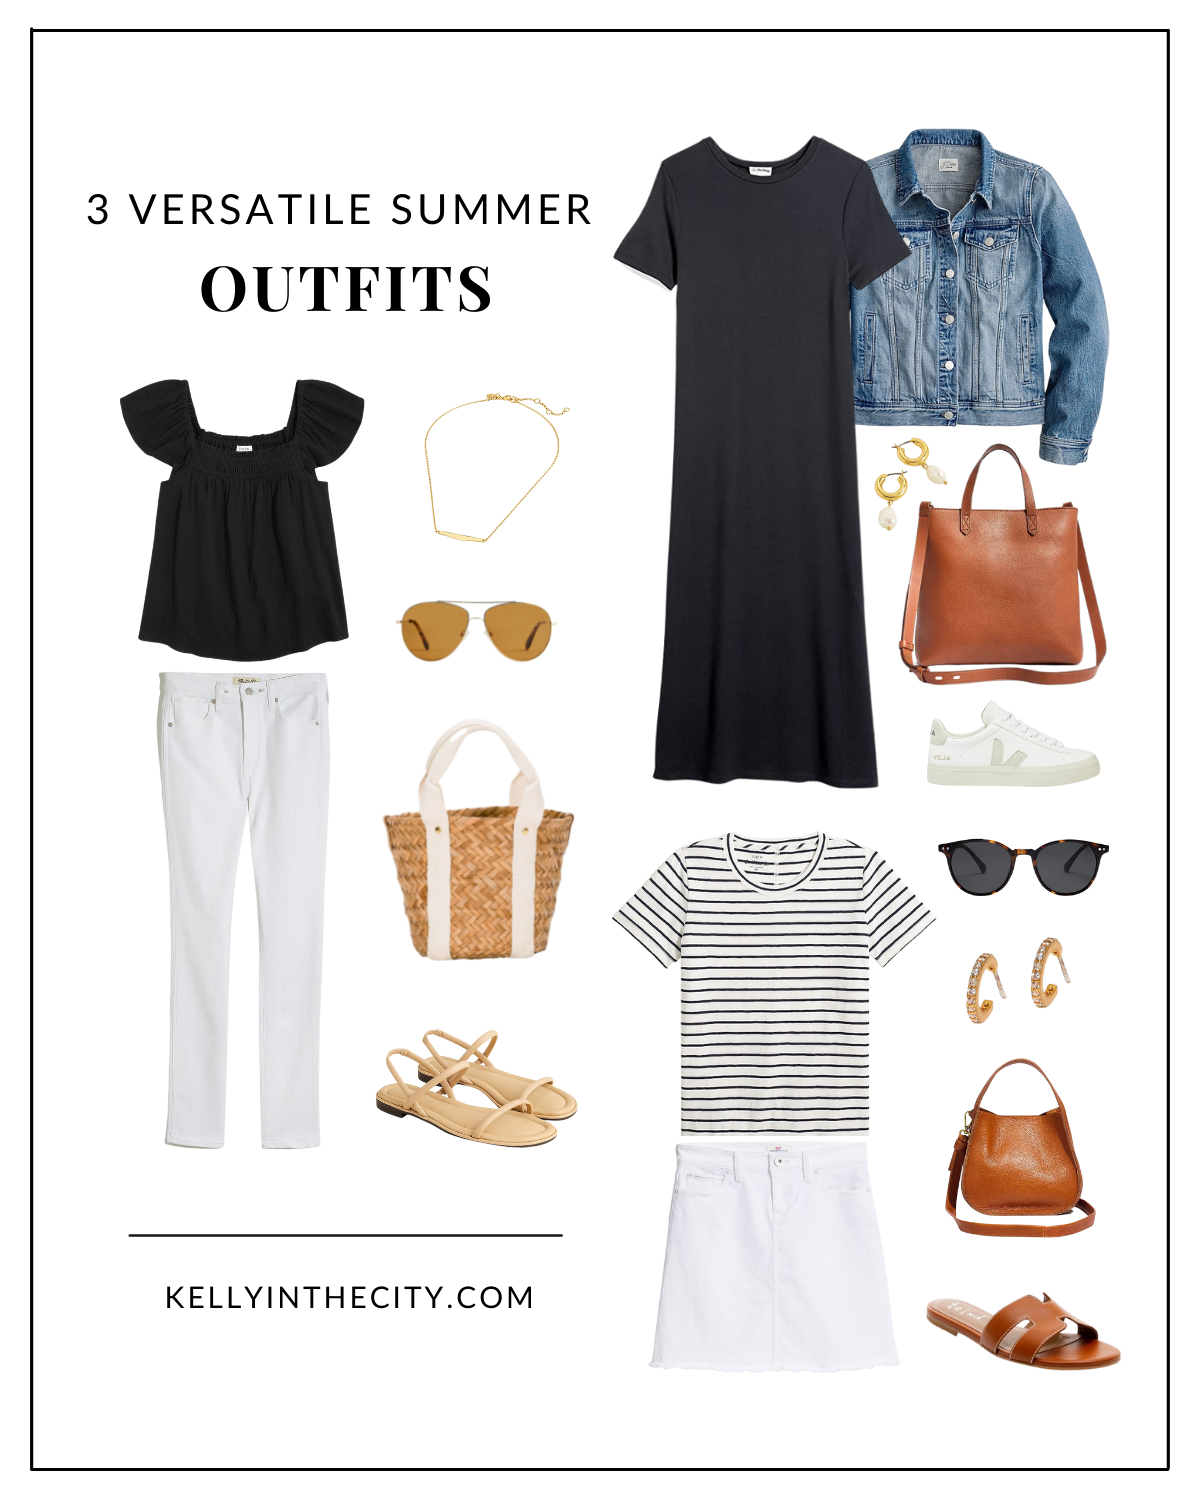 Versatile Summer Outfits